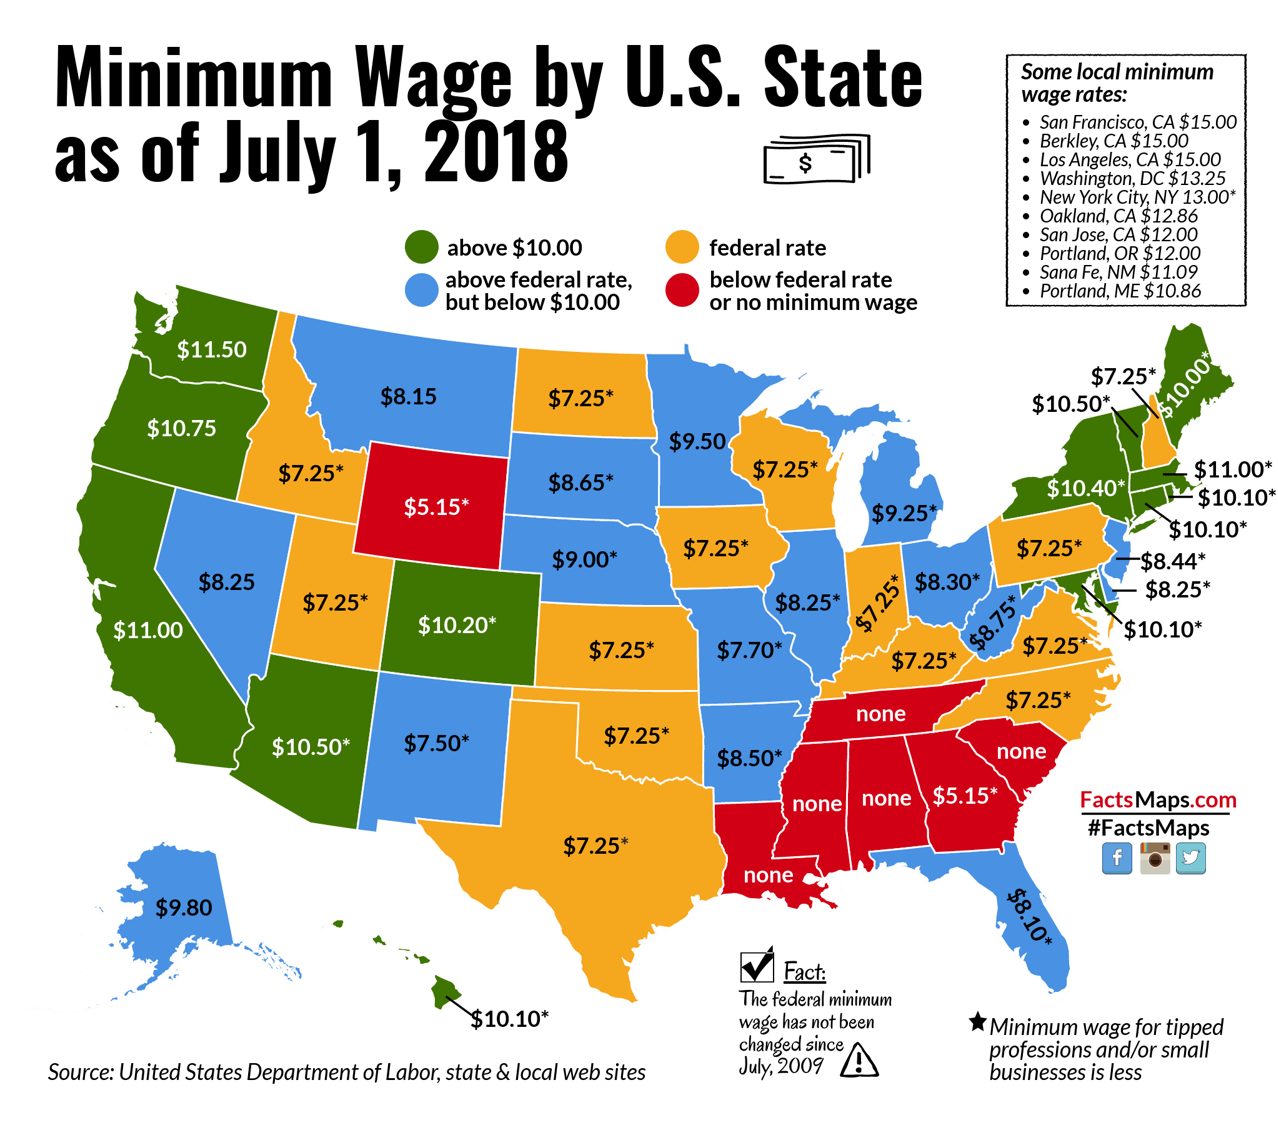 Source: http://factsmaps.com/minimum-wage-us-states-july-2018/